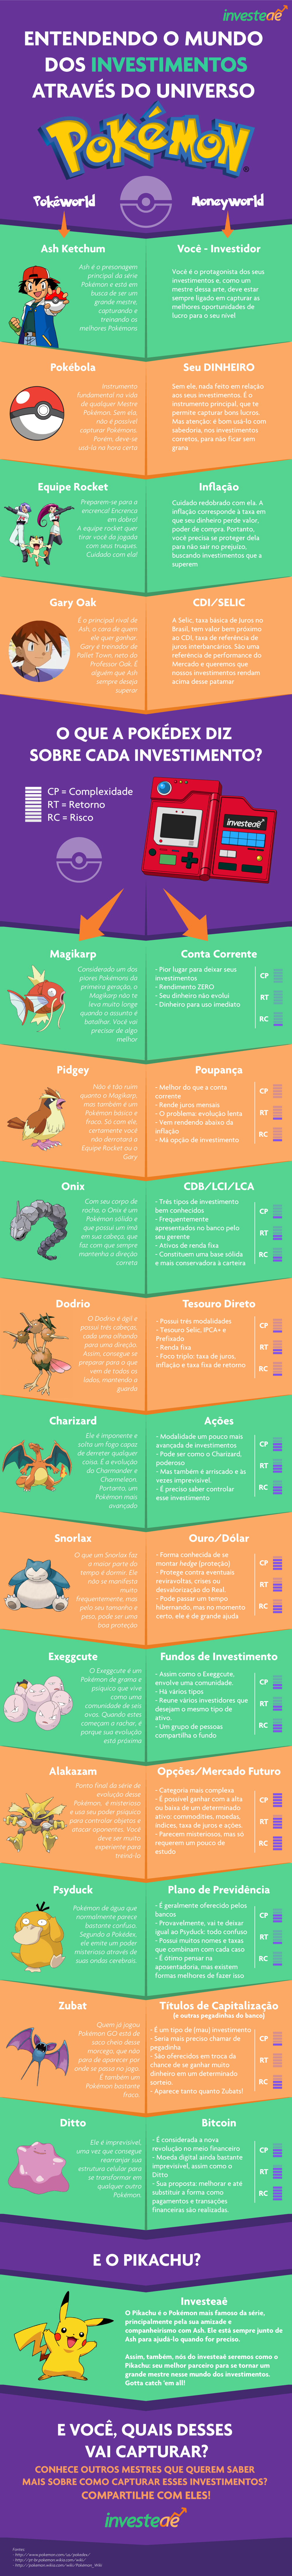 Infográfico Investeaê - Pokemon vs Investimentos